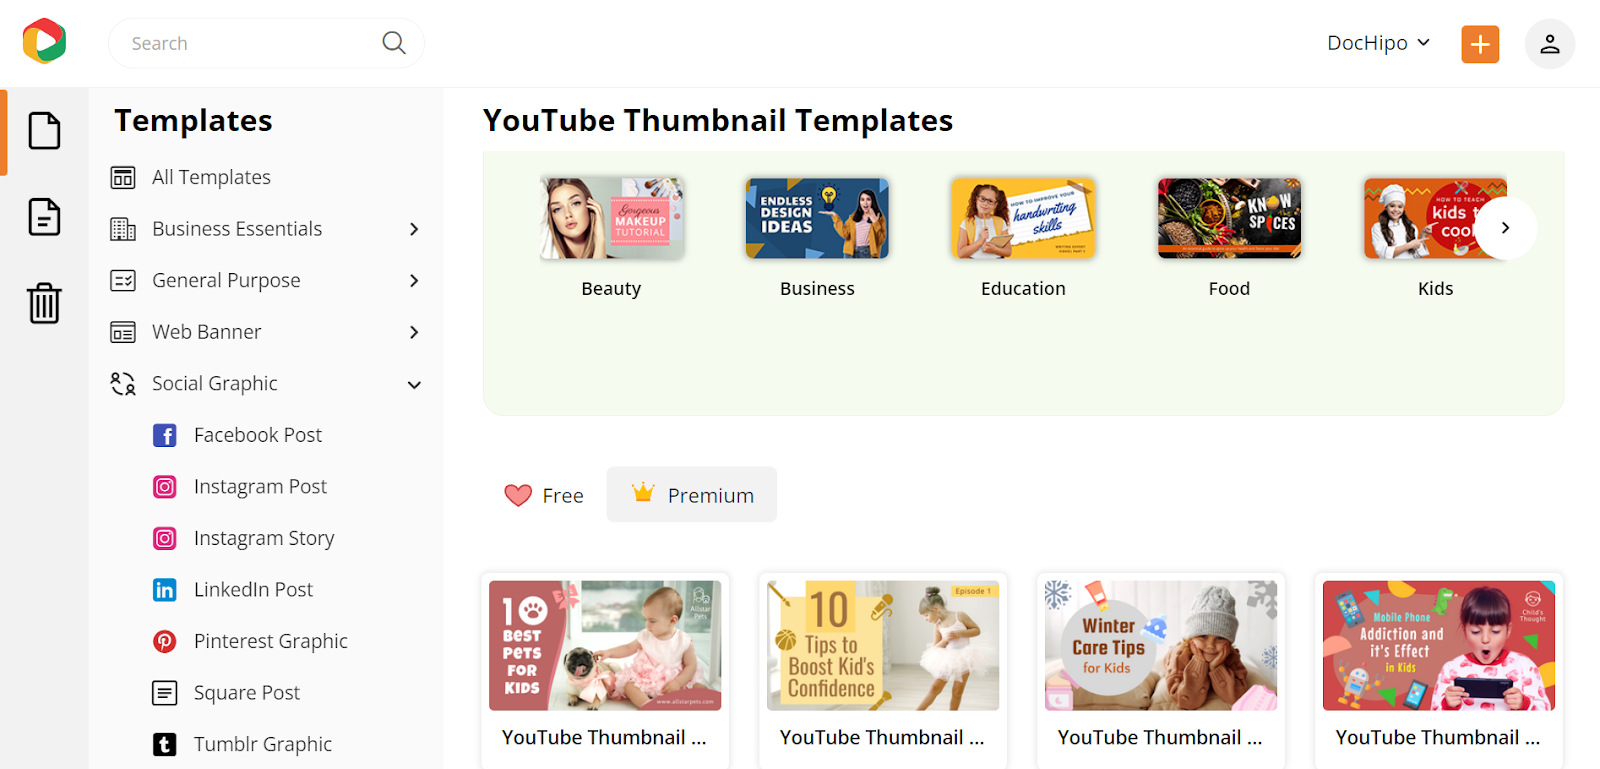 YouTube Thumbnail Templates